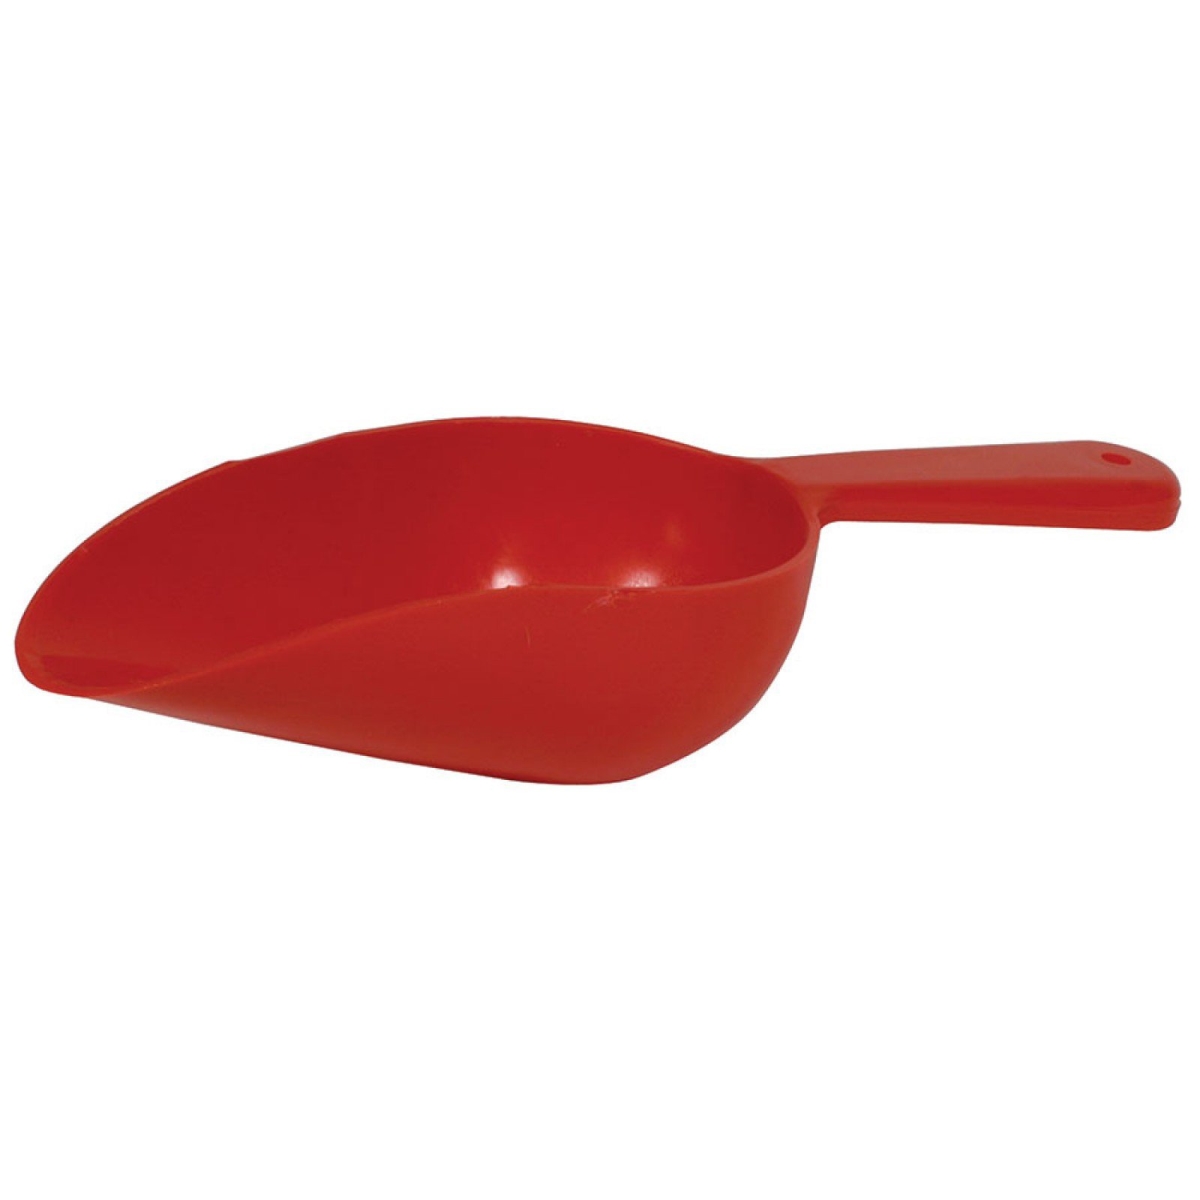 19205 4 In. Red Plastic Scoop Bowl